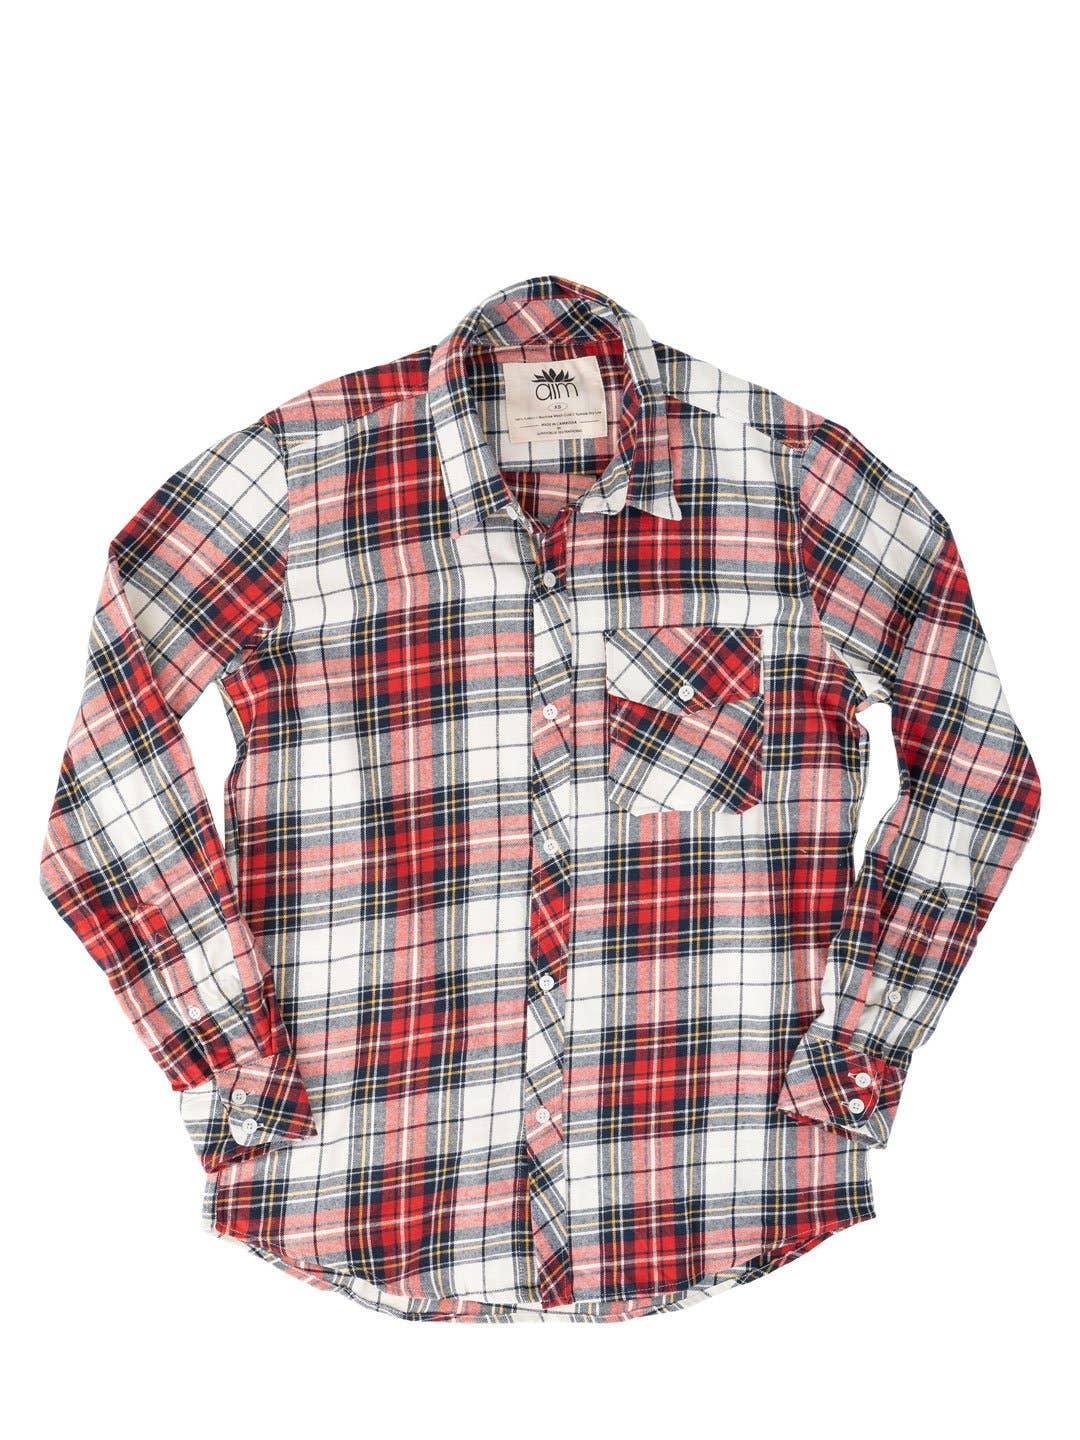 Scotch Plaid Unisex Classic Flannel Shirt - Ethical Trade Co